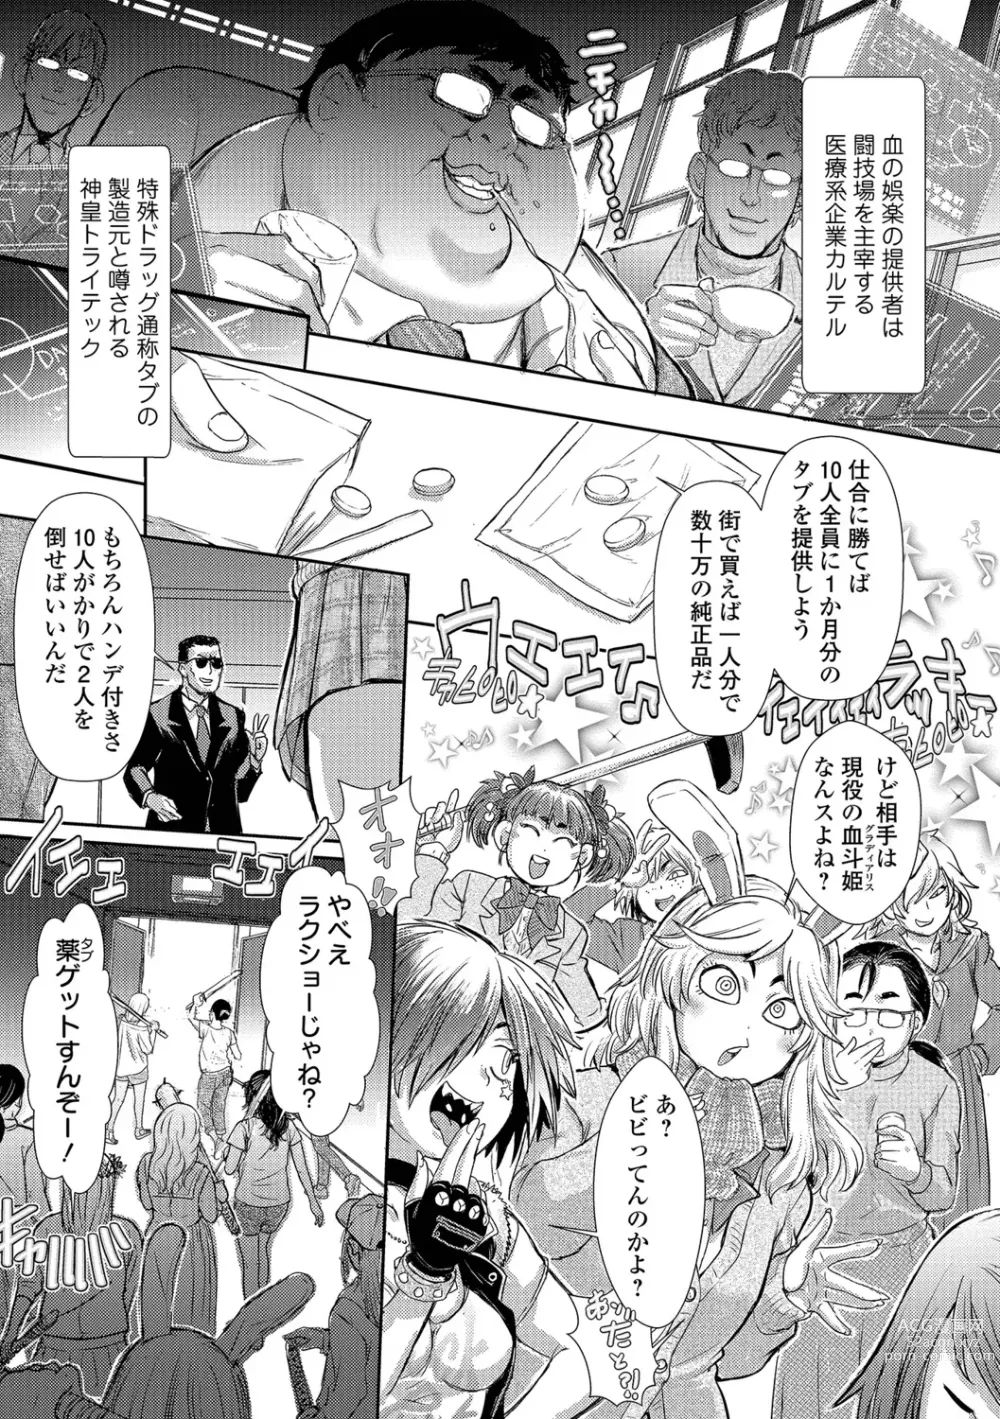 Page 13 of manga Ryona King Vol.18